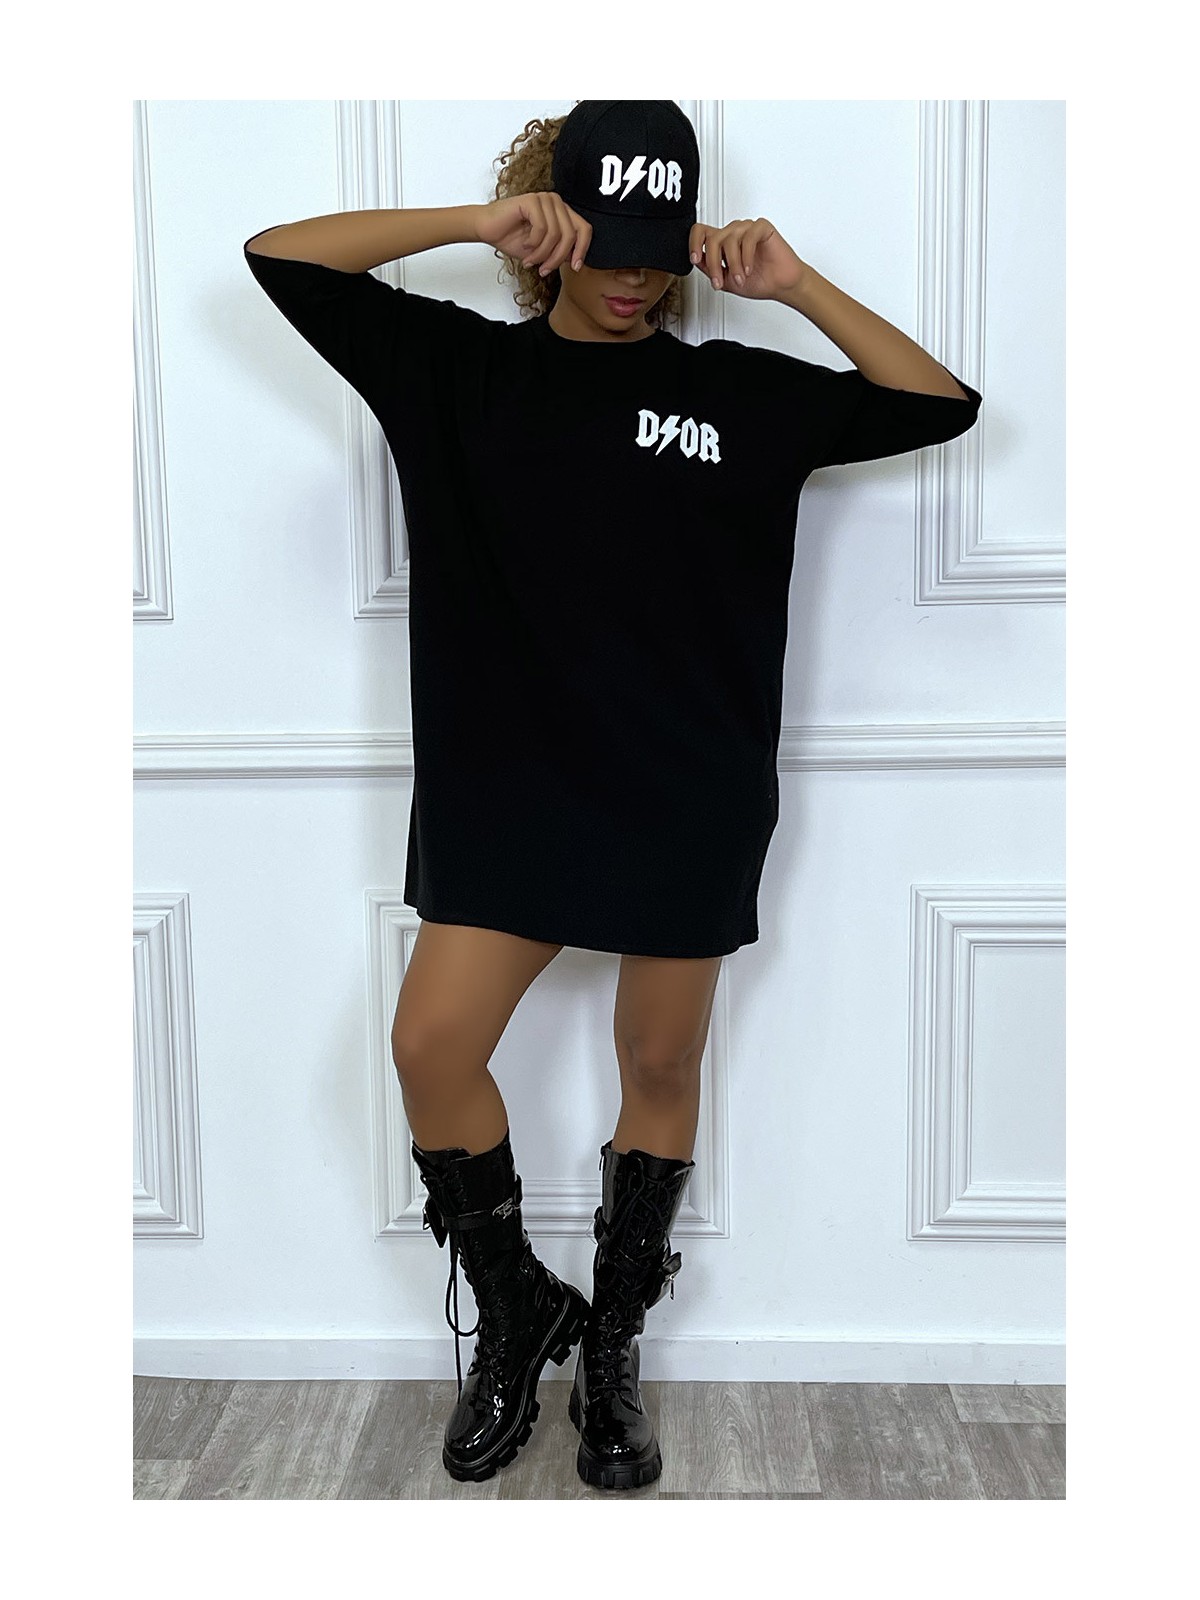 Tee-shirt oversize noir tendance, écriture "D/or", manche mi-longue - 7